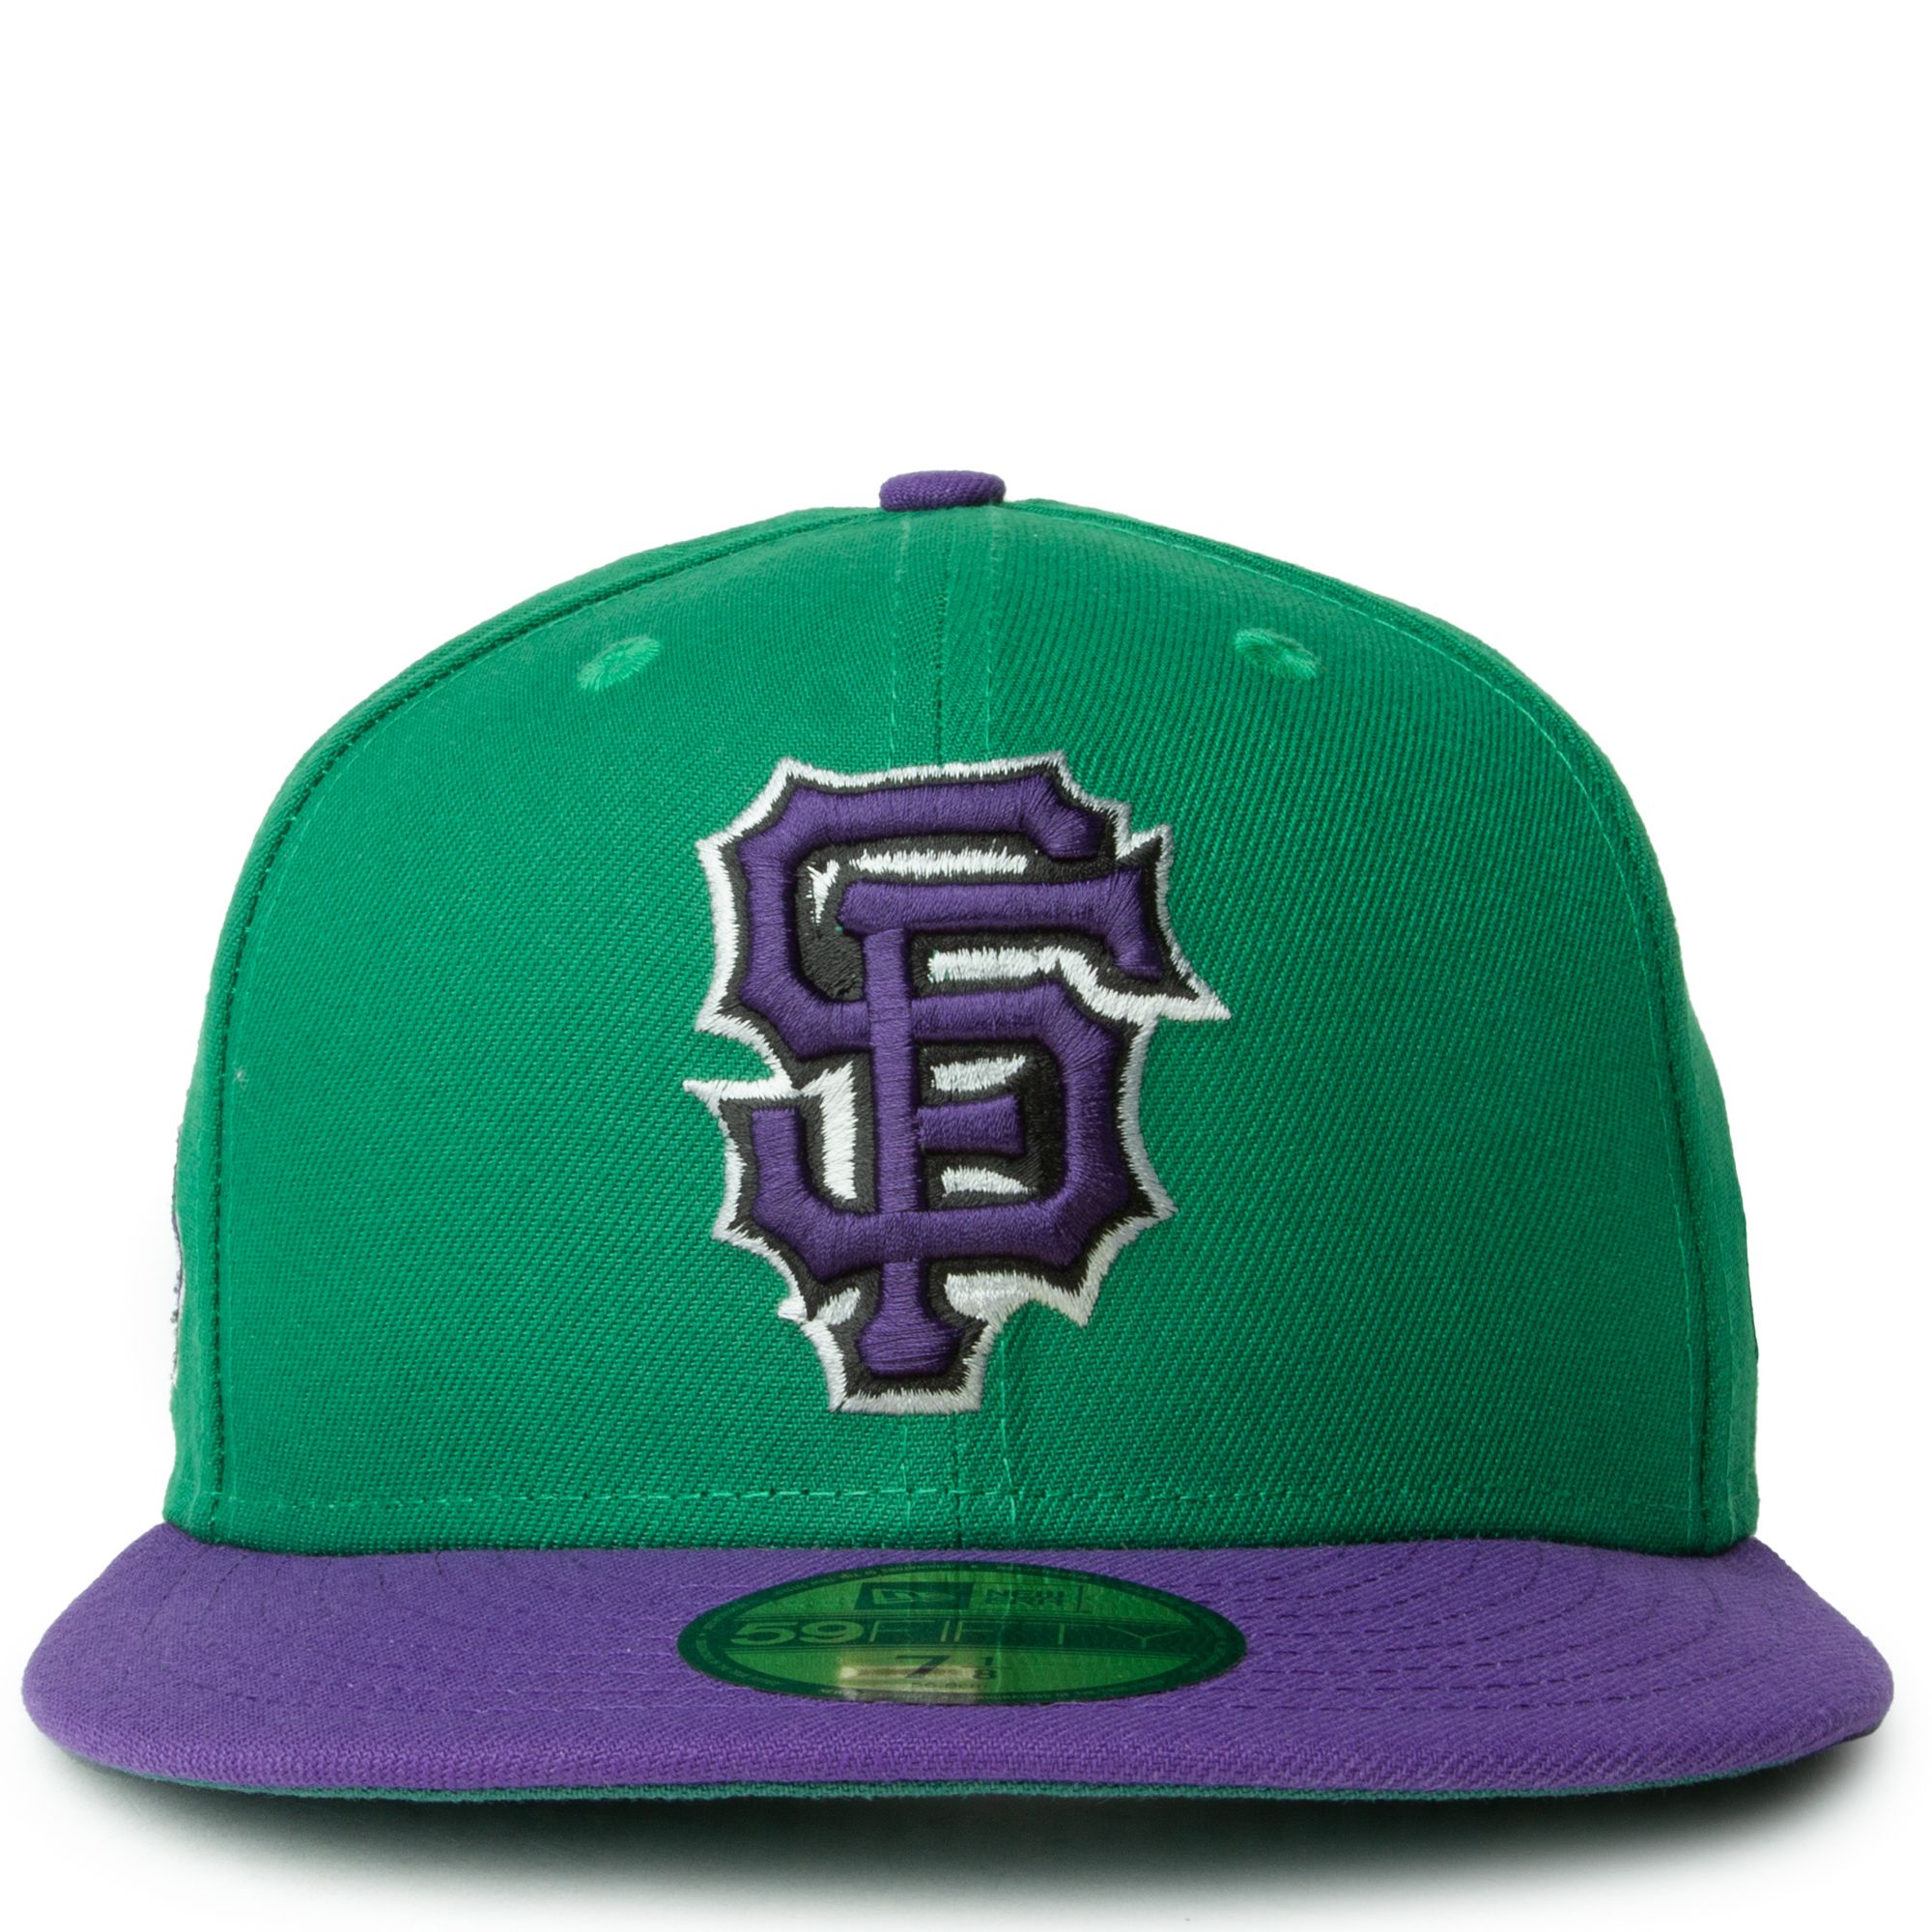 New Era Caps San Francisco Giants Green Purple 59FIFTY Fitted Cap Green/Purple